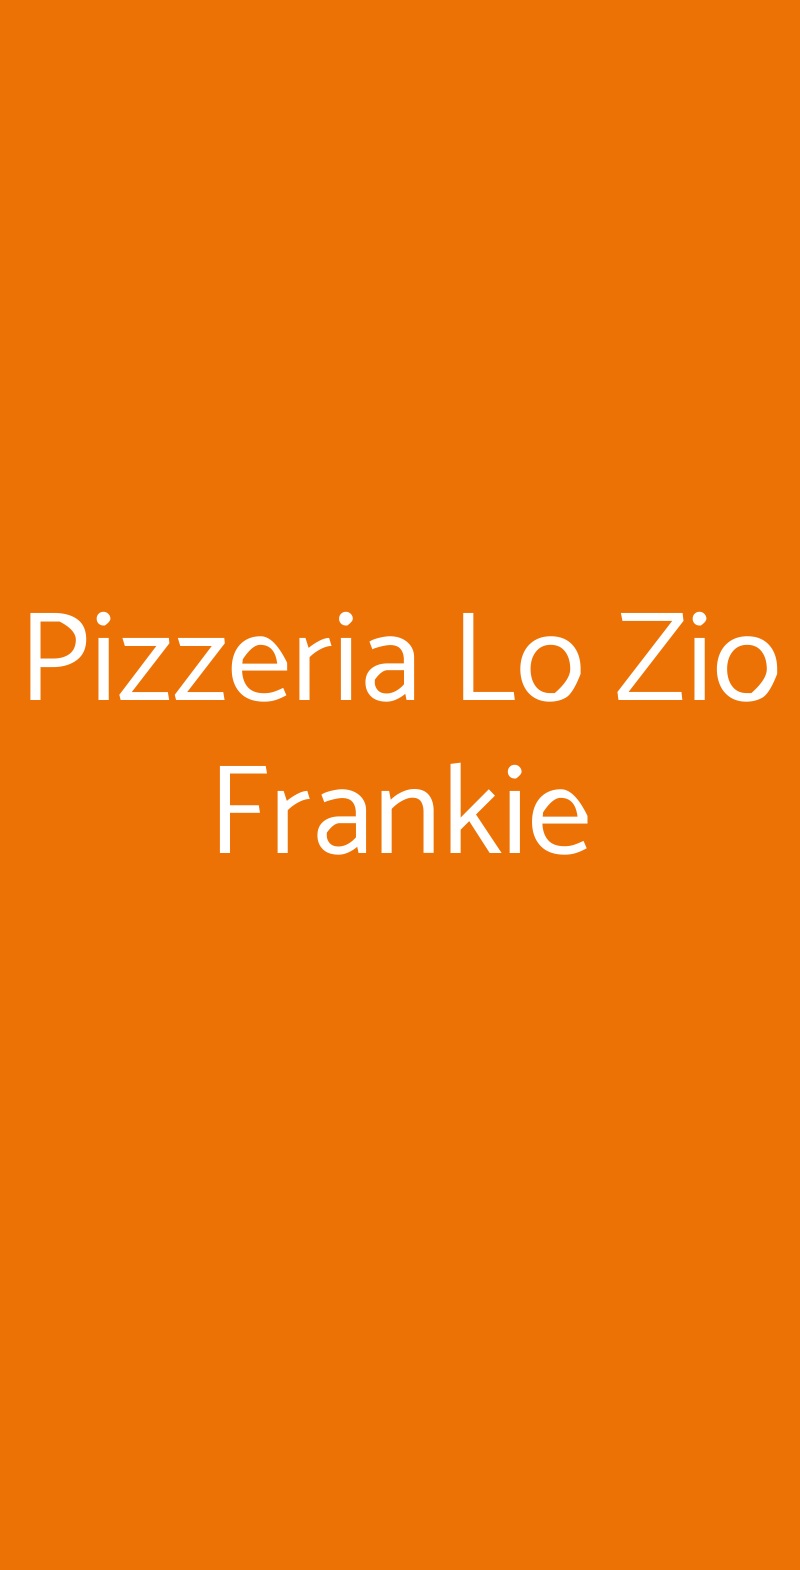 Pizzeria Lo Zio Frankie Roma menù 1 pagina